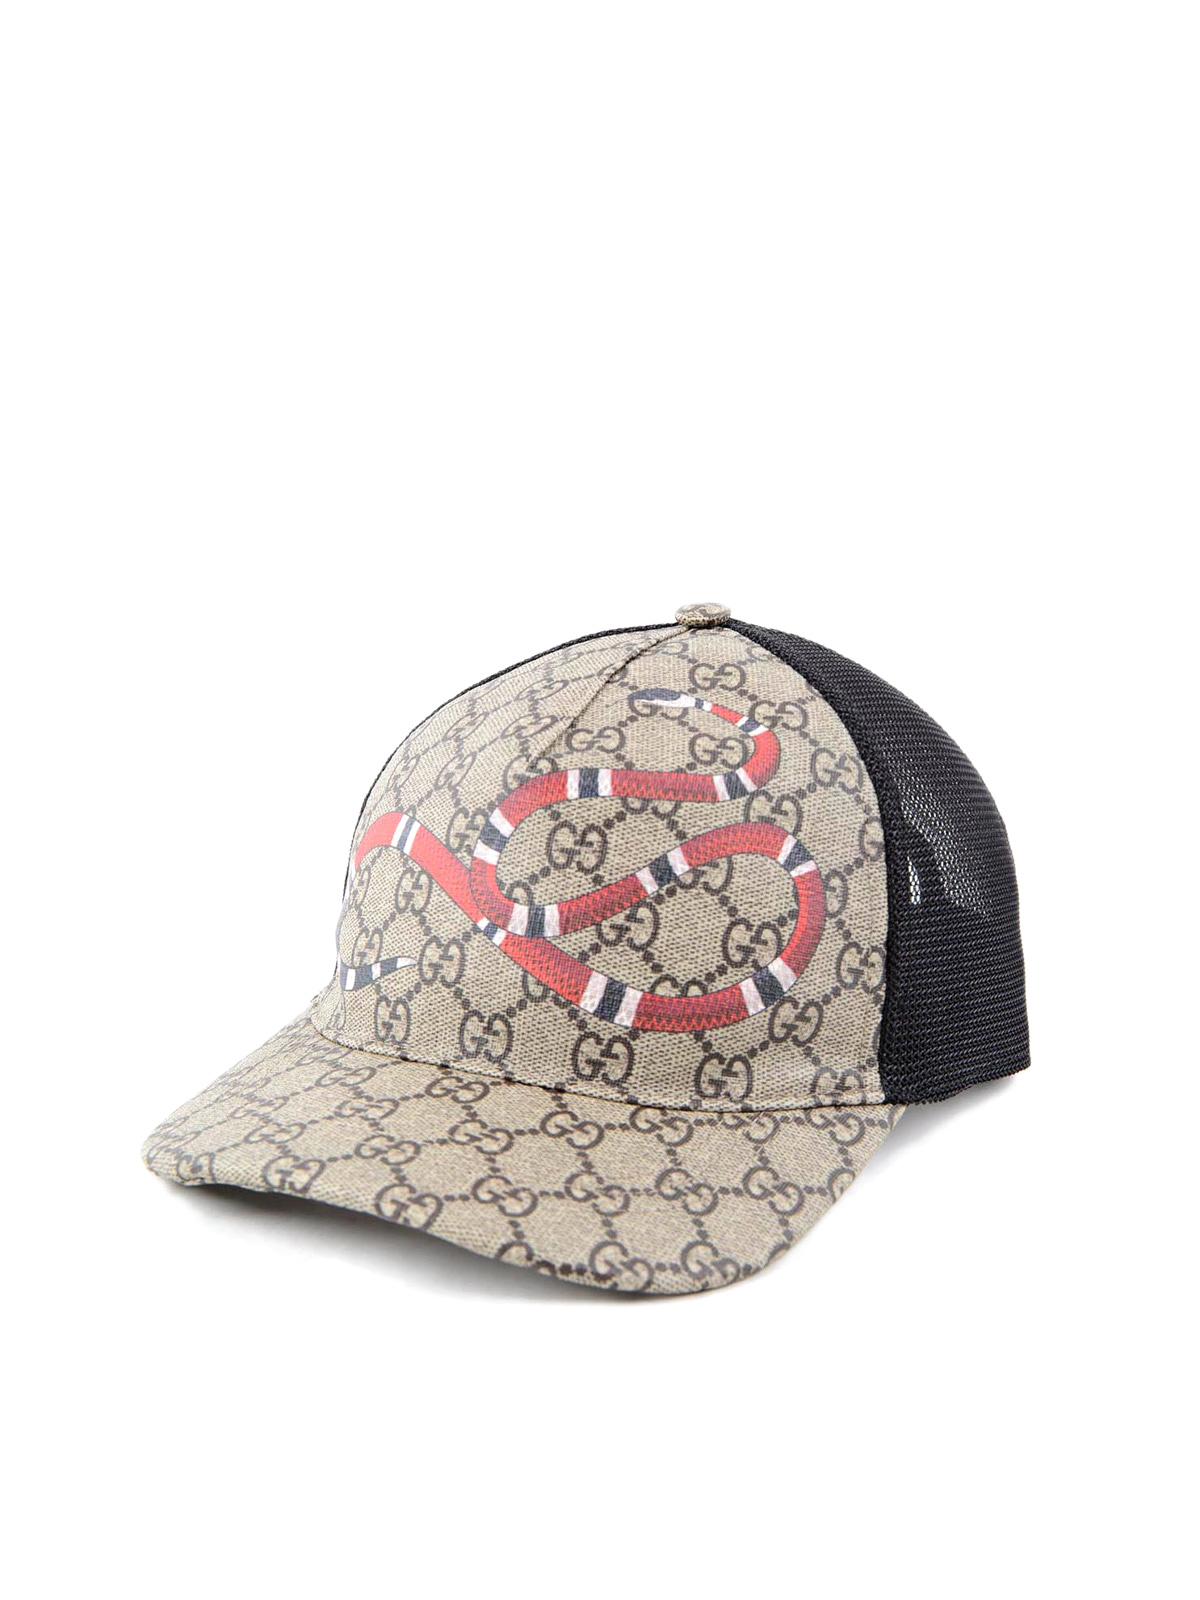 Gucci - Snake GG Supreme baseball hat 